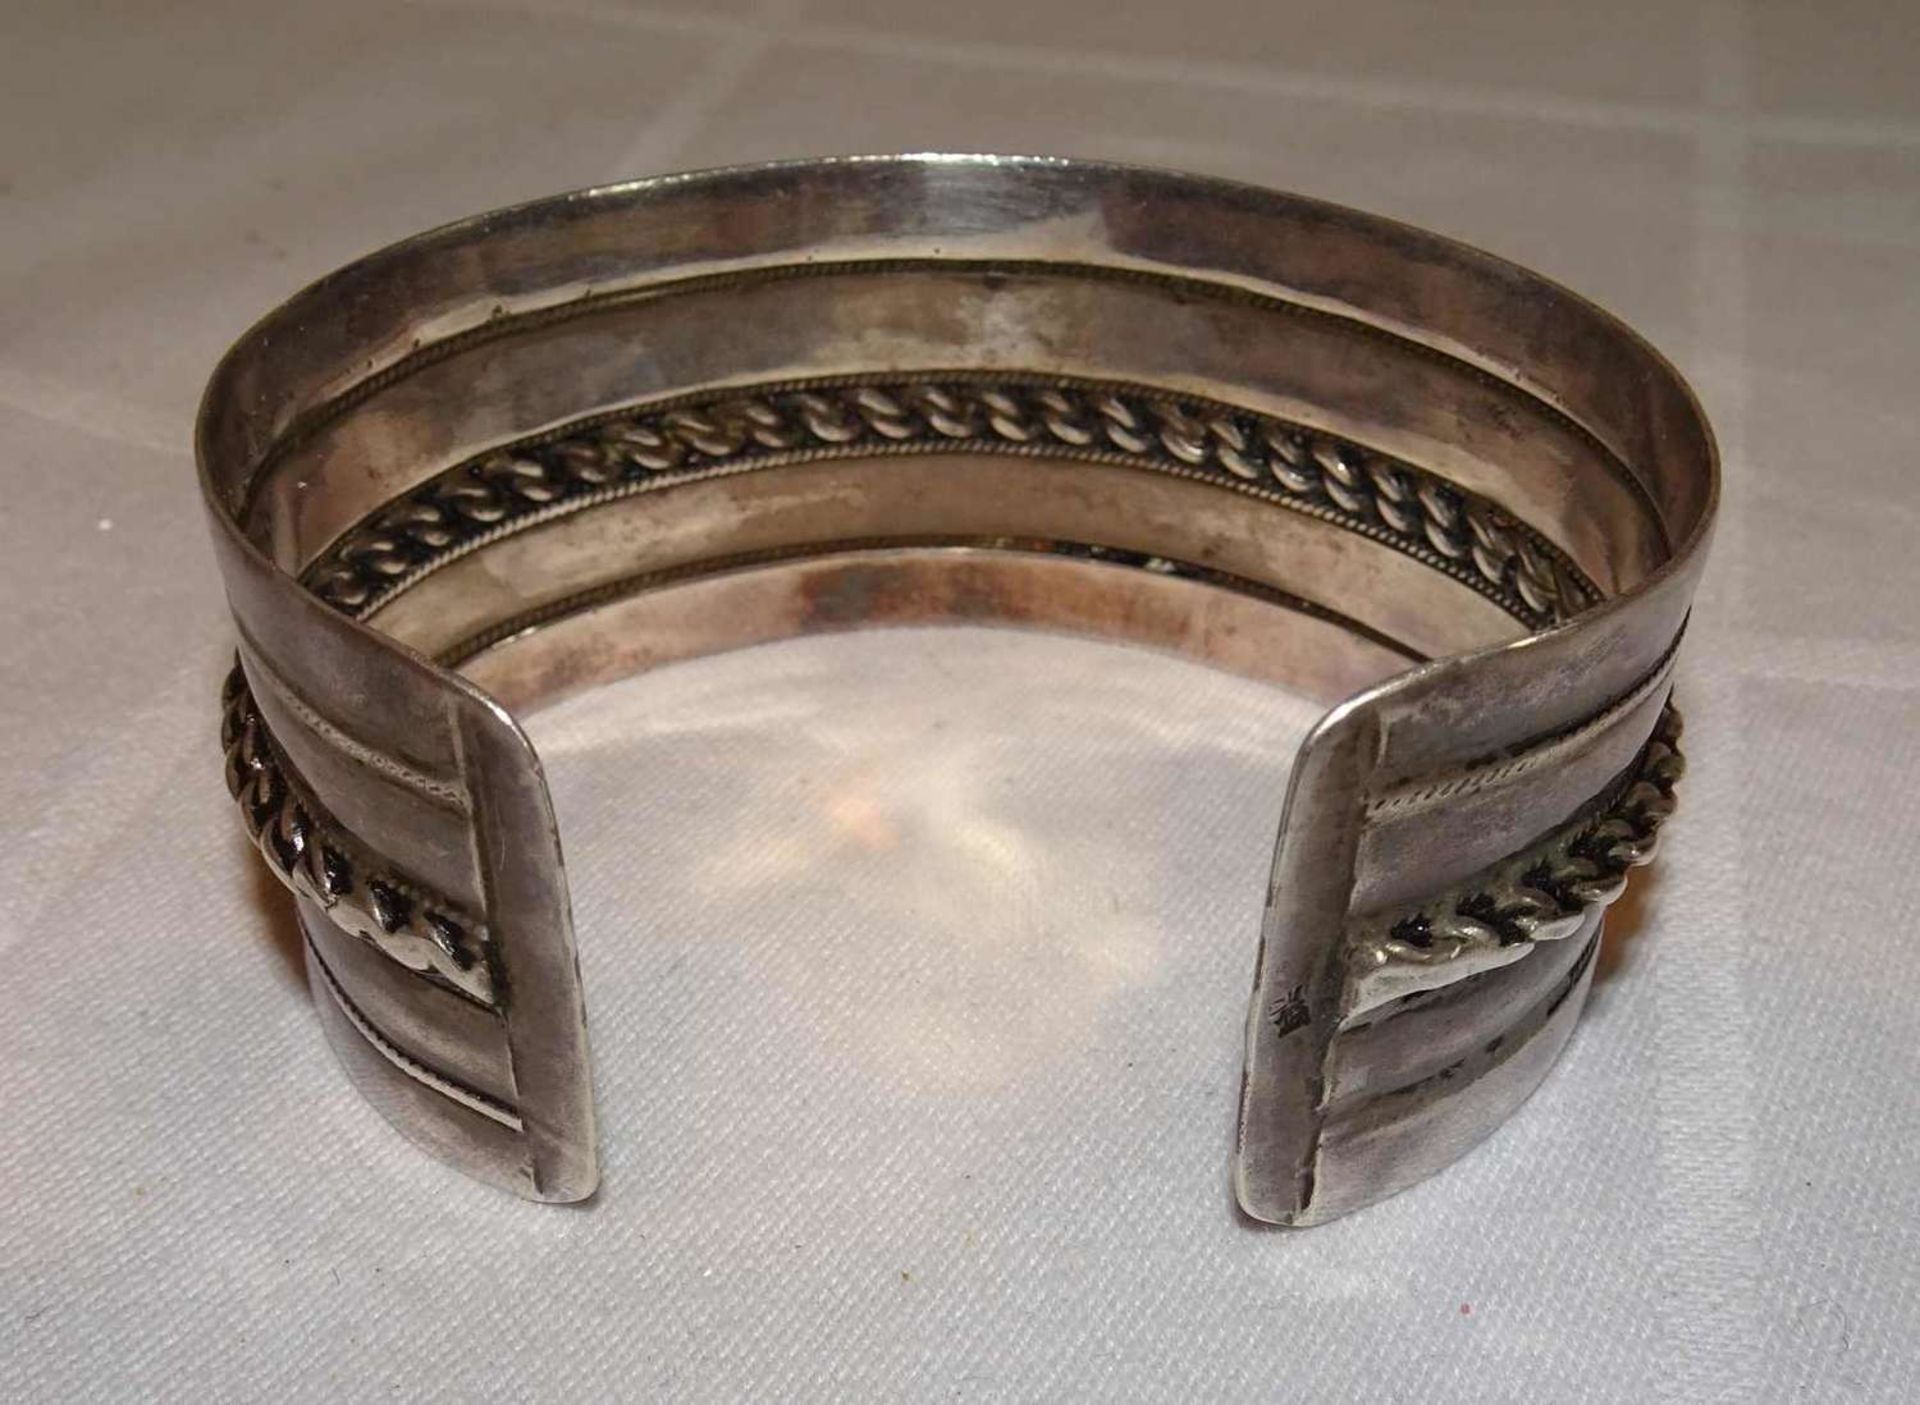 Armreif, 835er Silber. Offene Ringschiene. Gewicht ca. 45,4 gr.Bangle, 835 silver. Open ring band. - Image 2 of 2